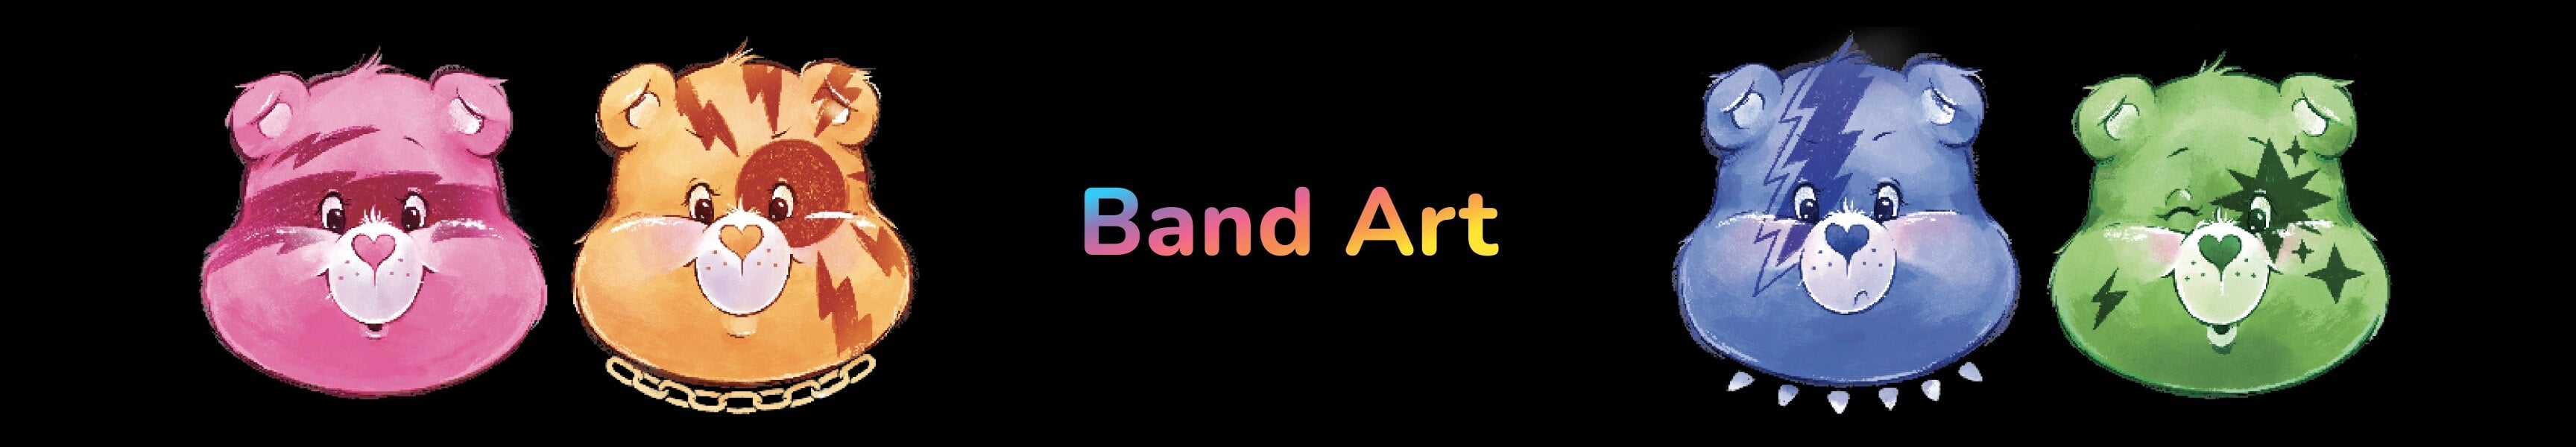 Band Art